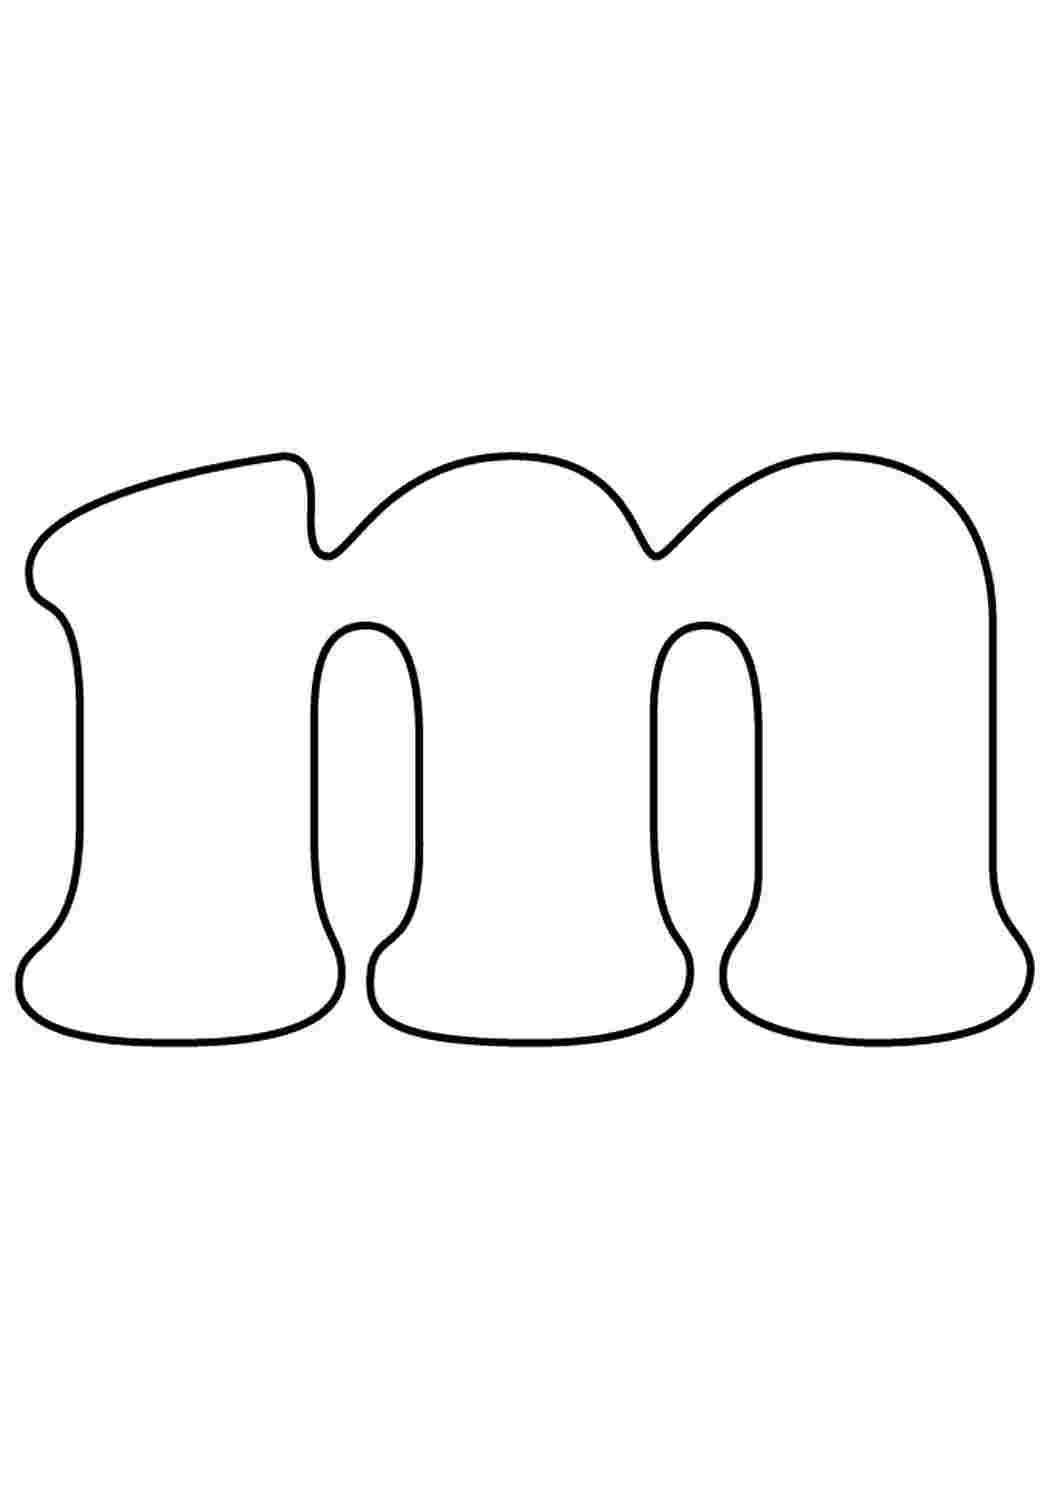 Буквы m&m трафарет